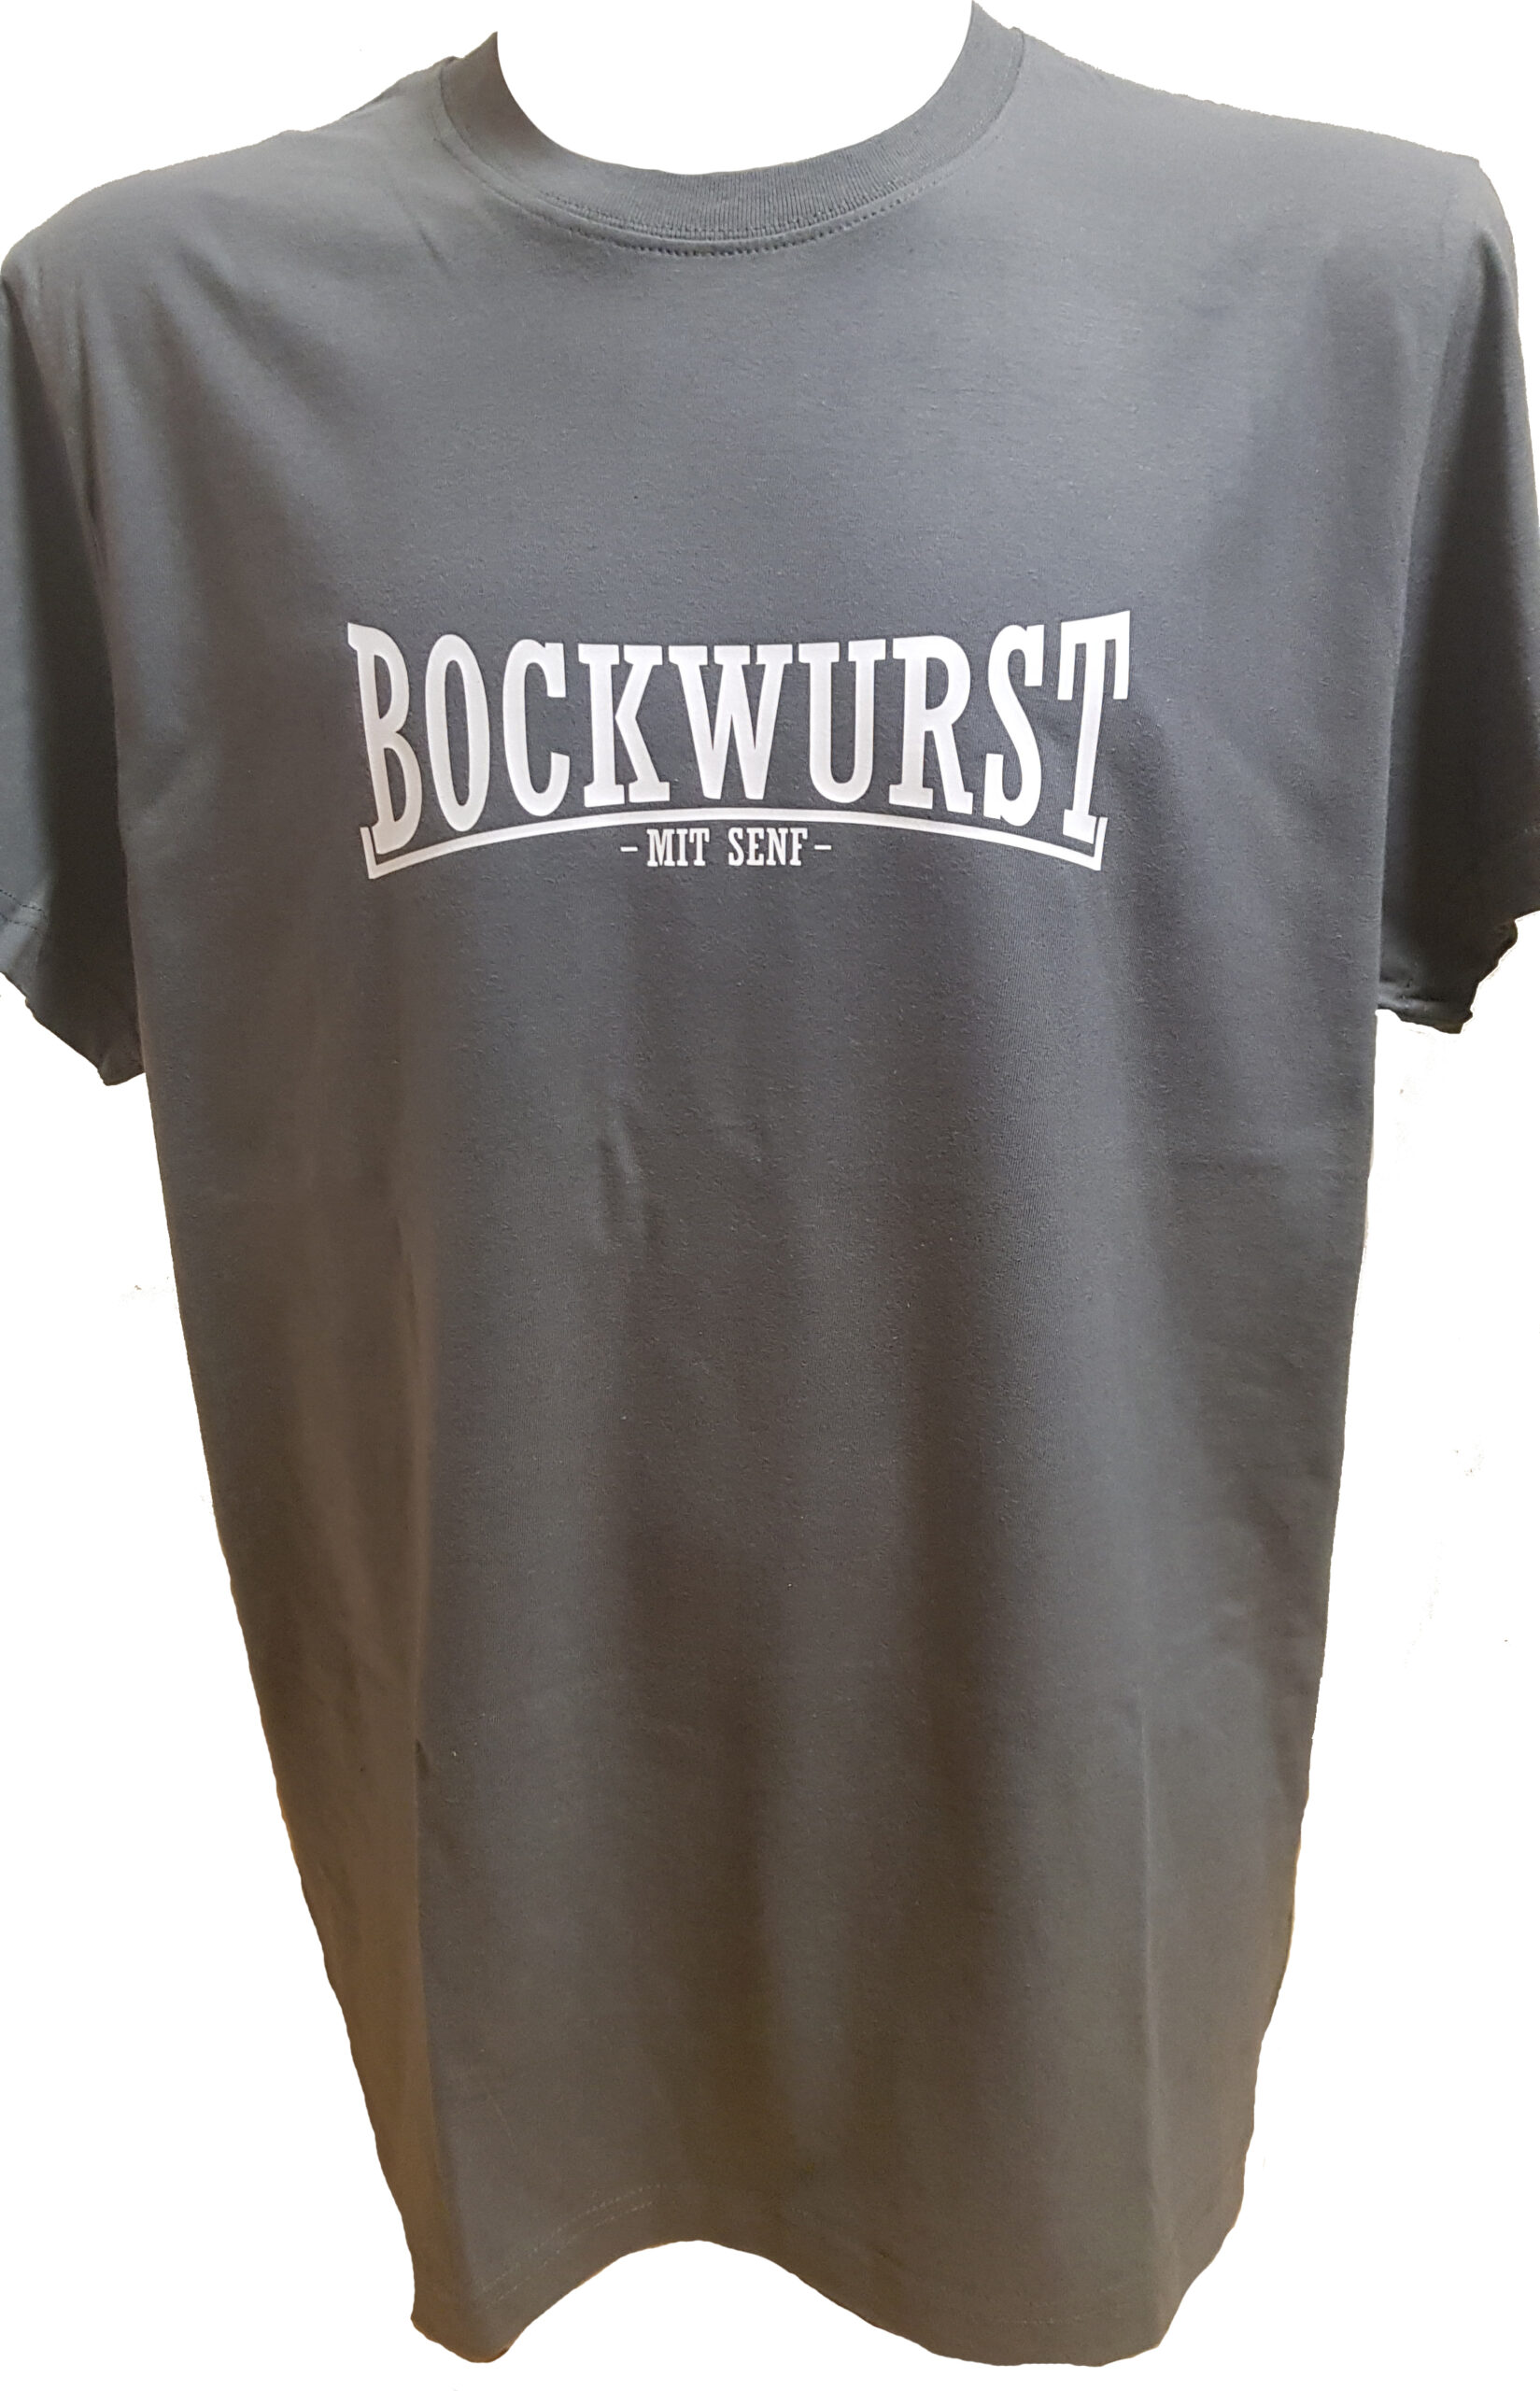 T-Shirt Bockwurst mit Senf – Merchandise Shadow